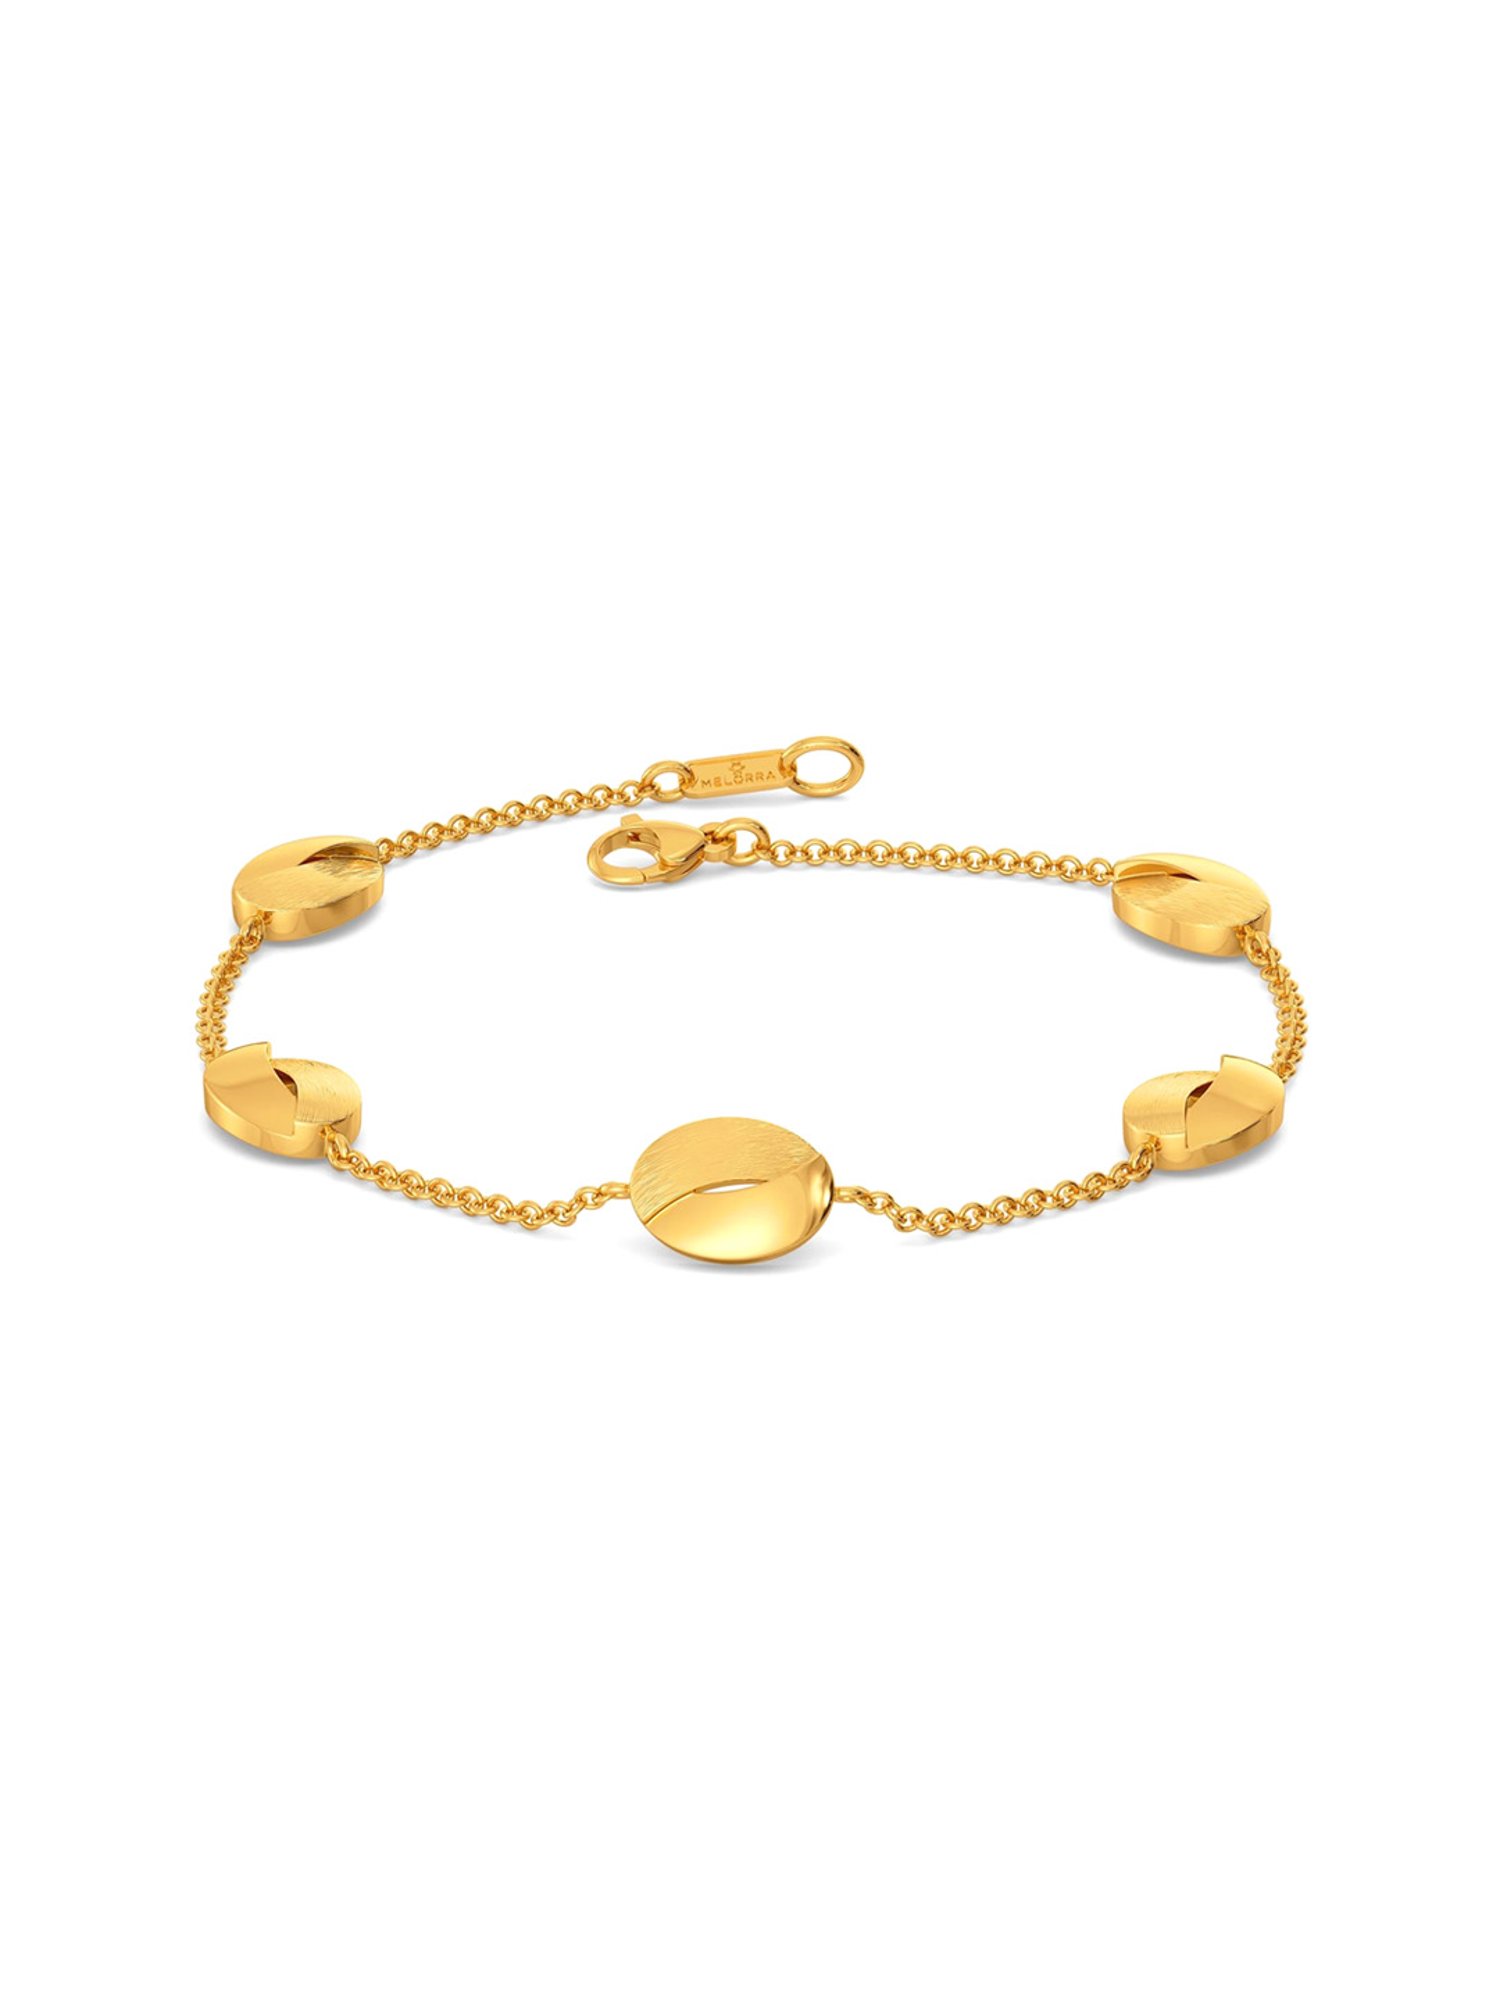 Charming Gold Bracelet With Black Beads  Lagu Bandhu